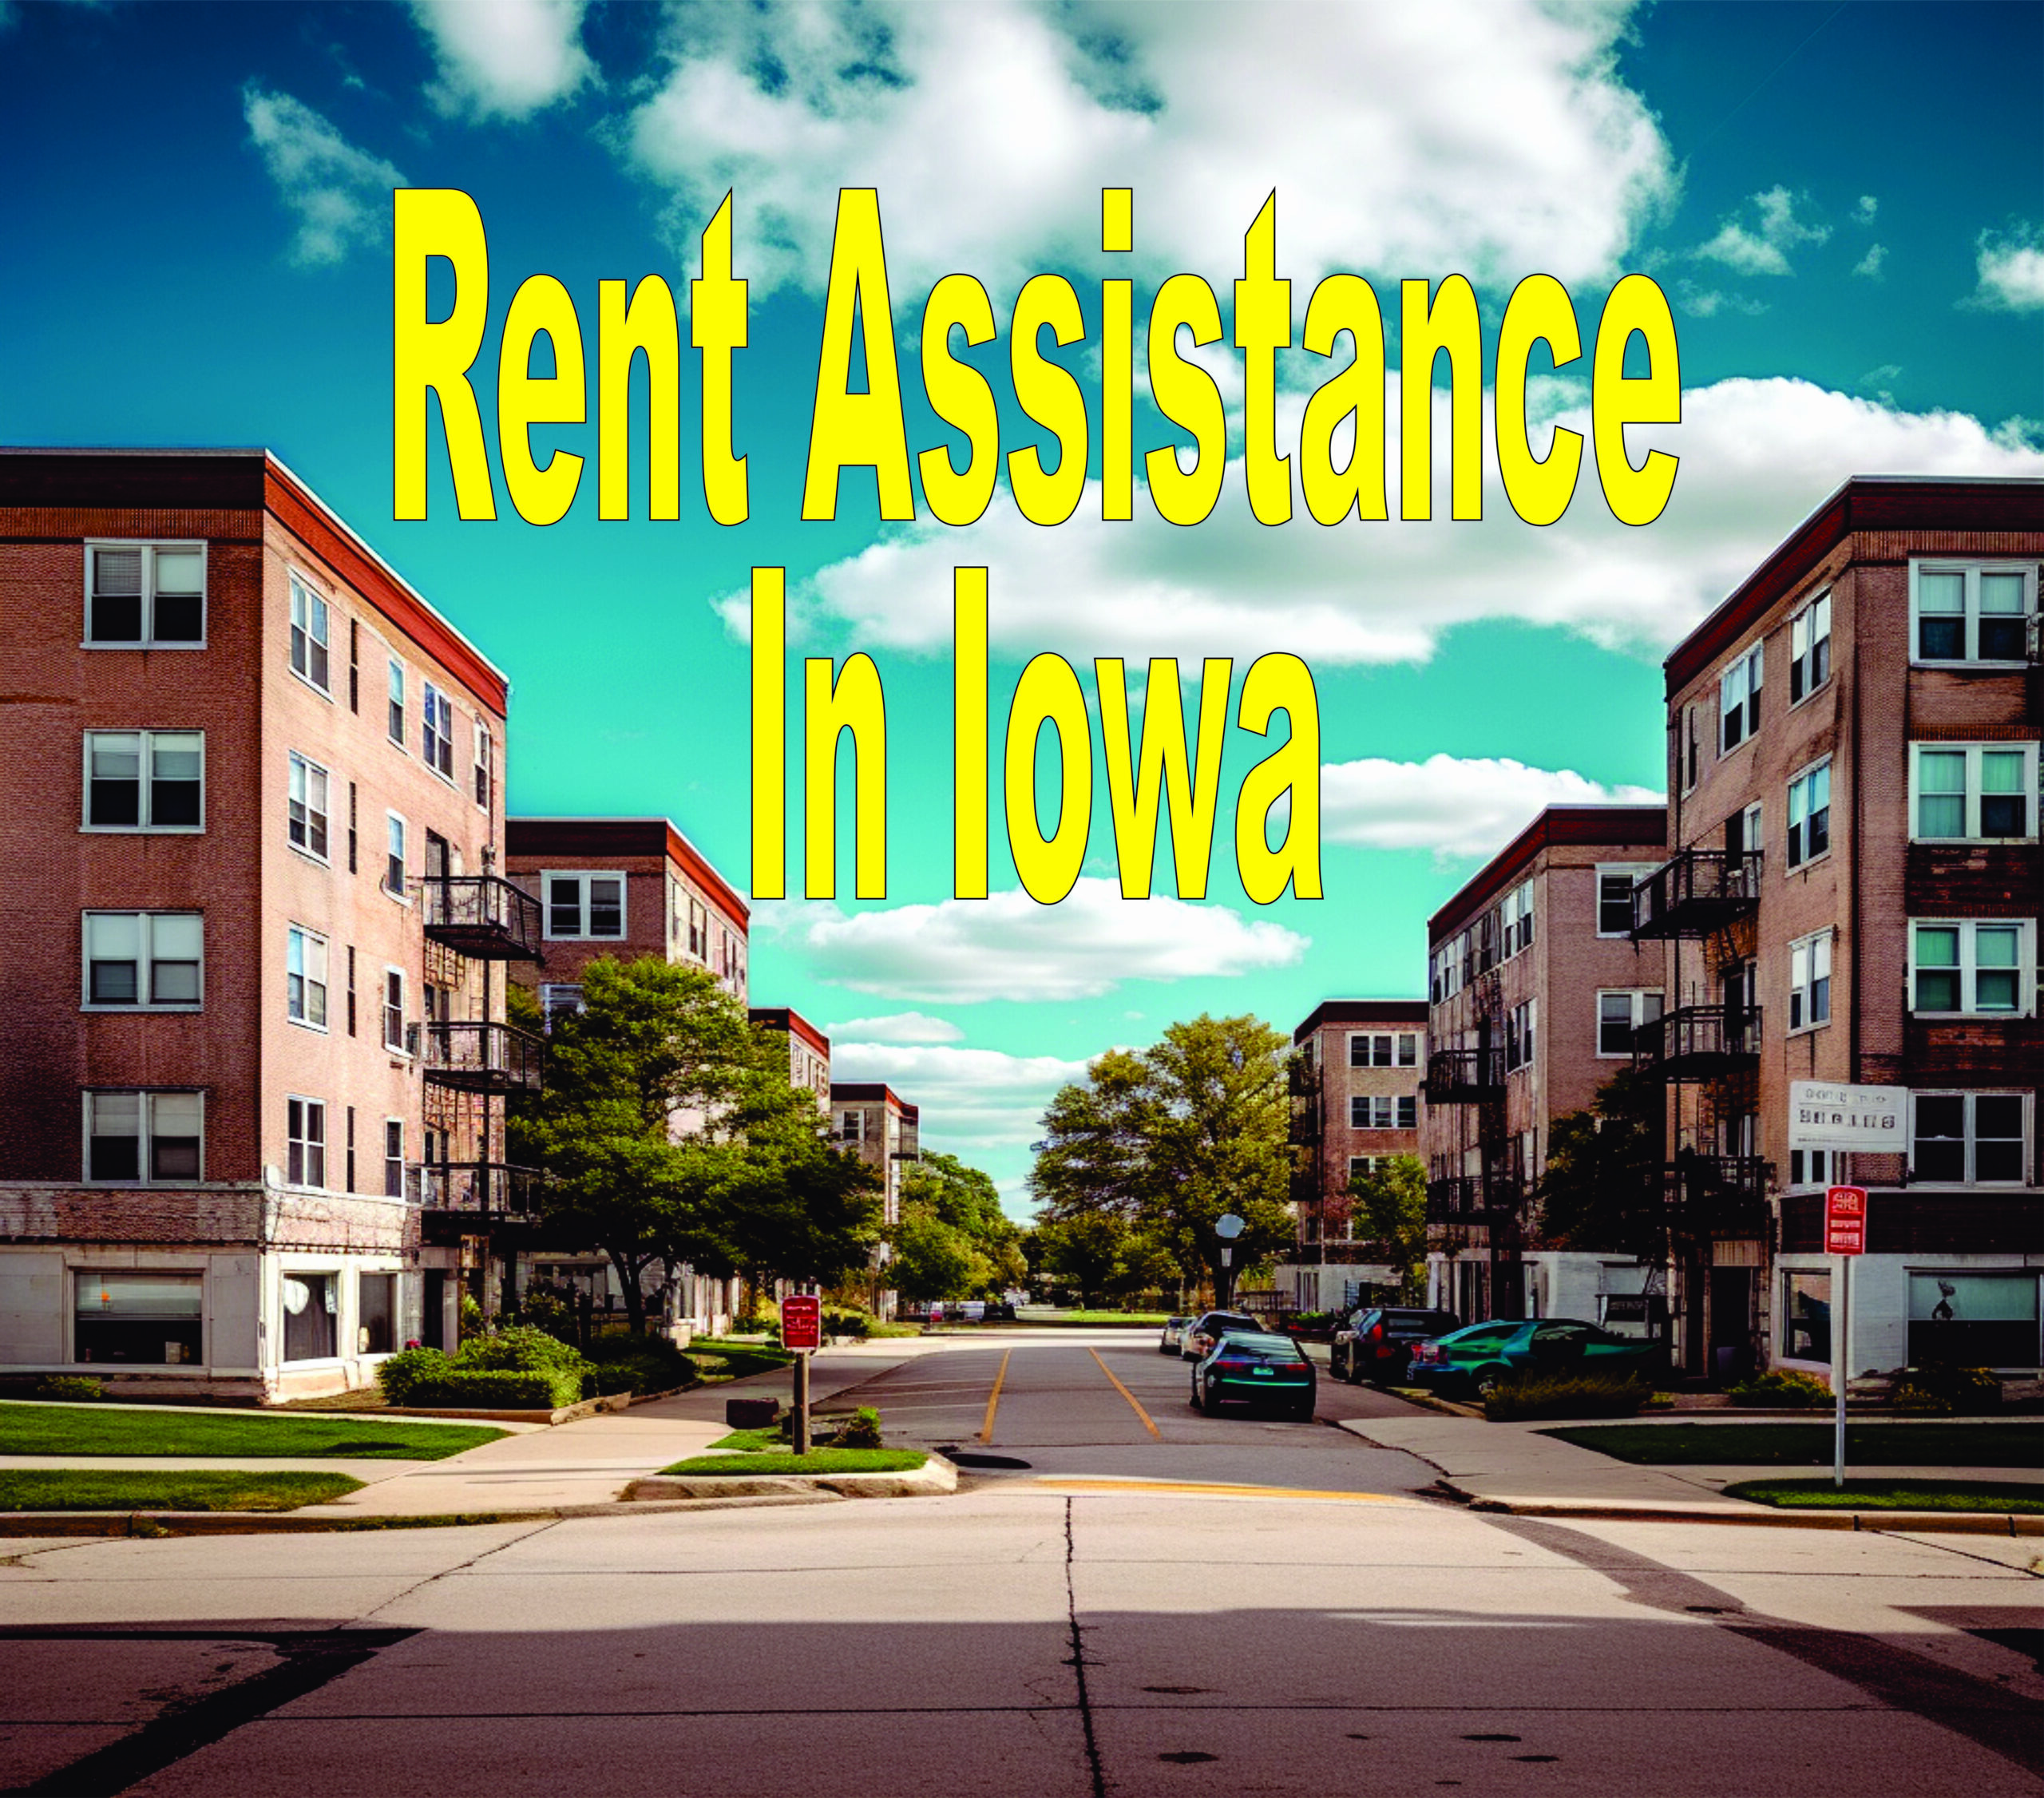 Rent Assistance In Iowa